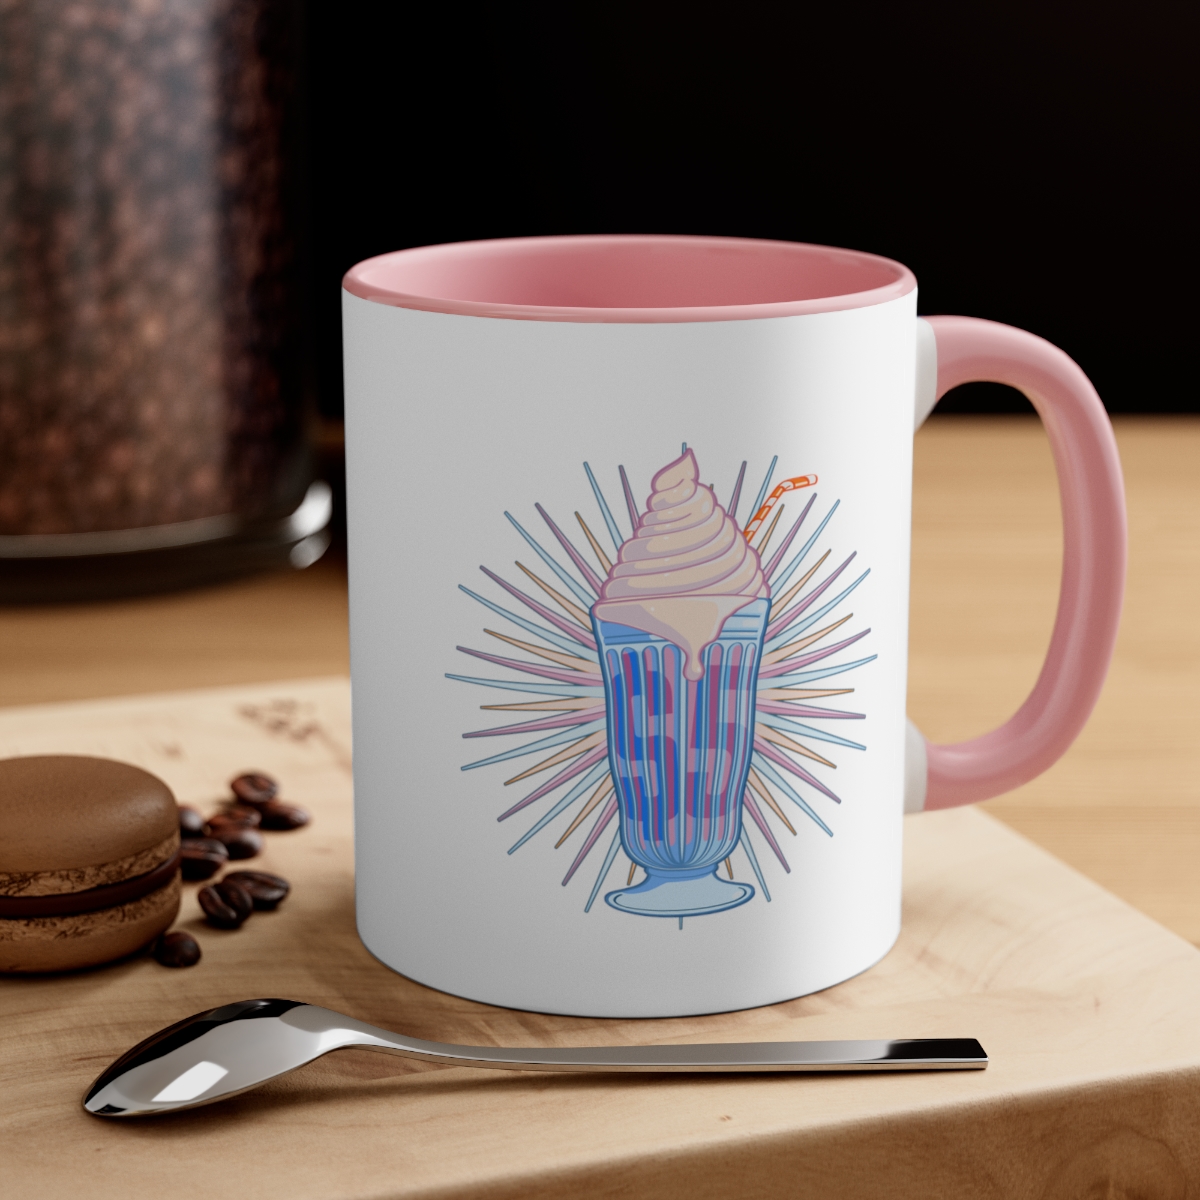 Milkshake - Accent Coffee Mug, 11oz